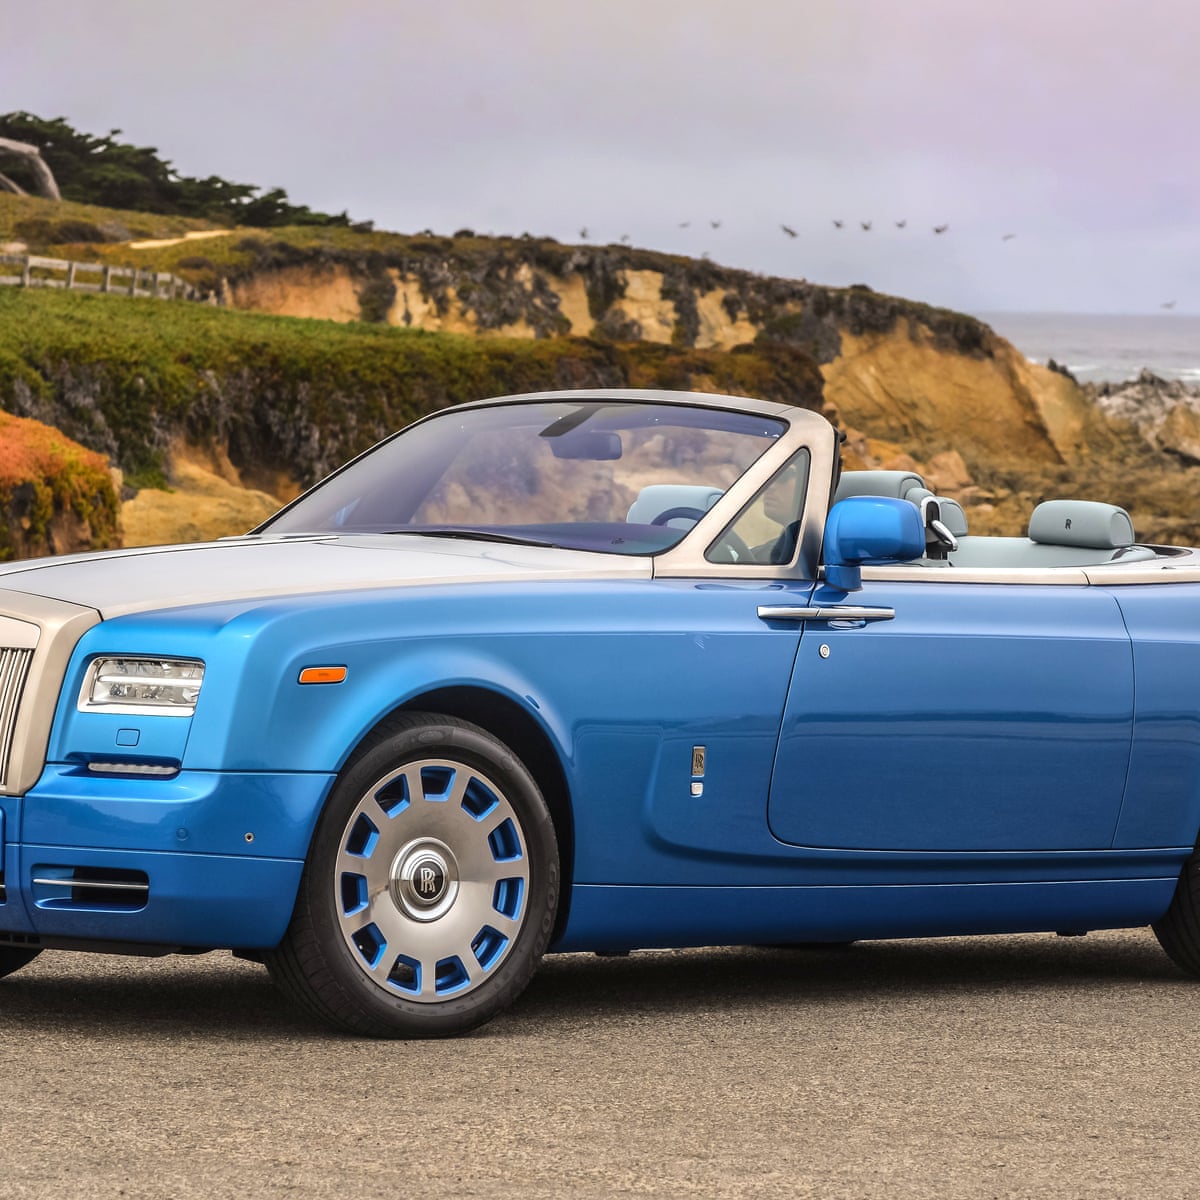 Rolls-Royce Phantom Drophead Coupé: car review | Motoring | The Guardian